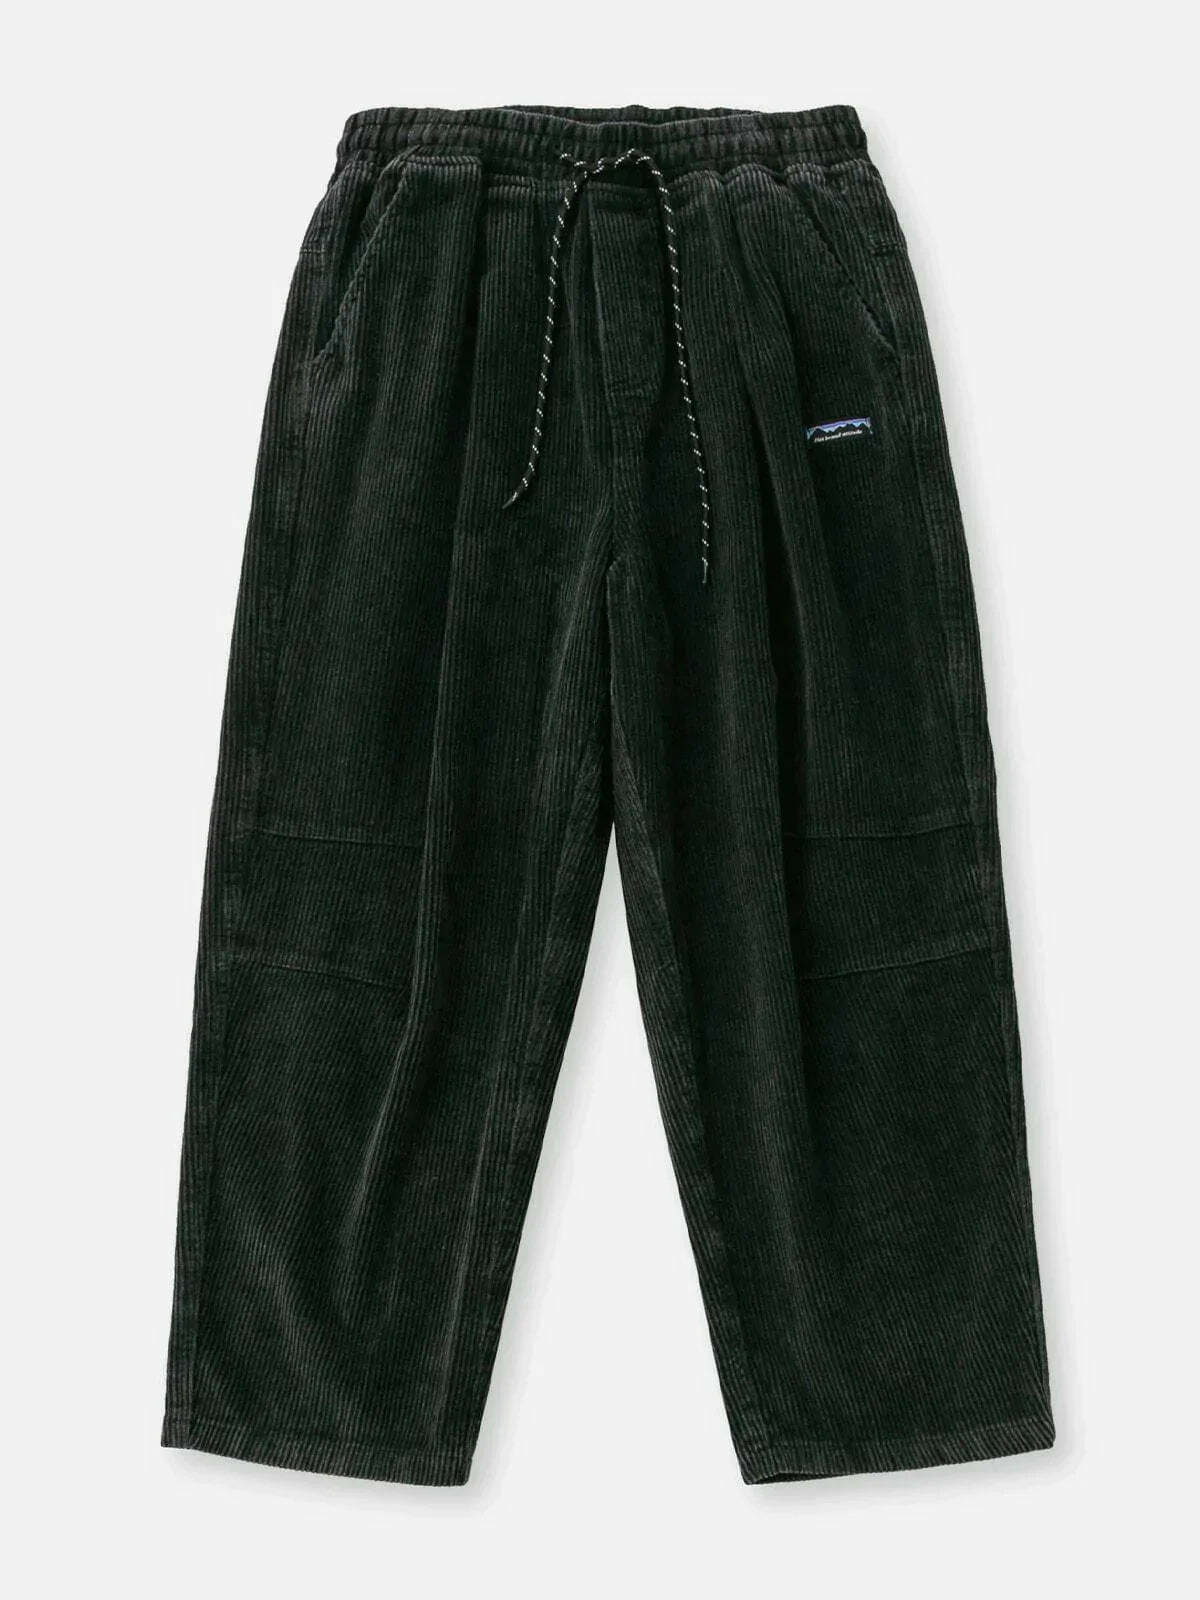 washed corduroy pants retro streetwear essential 3477